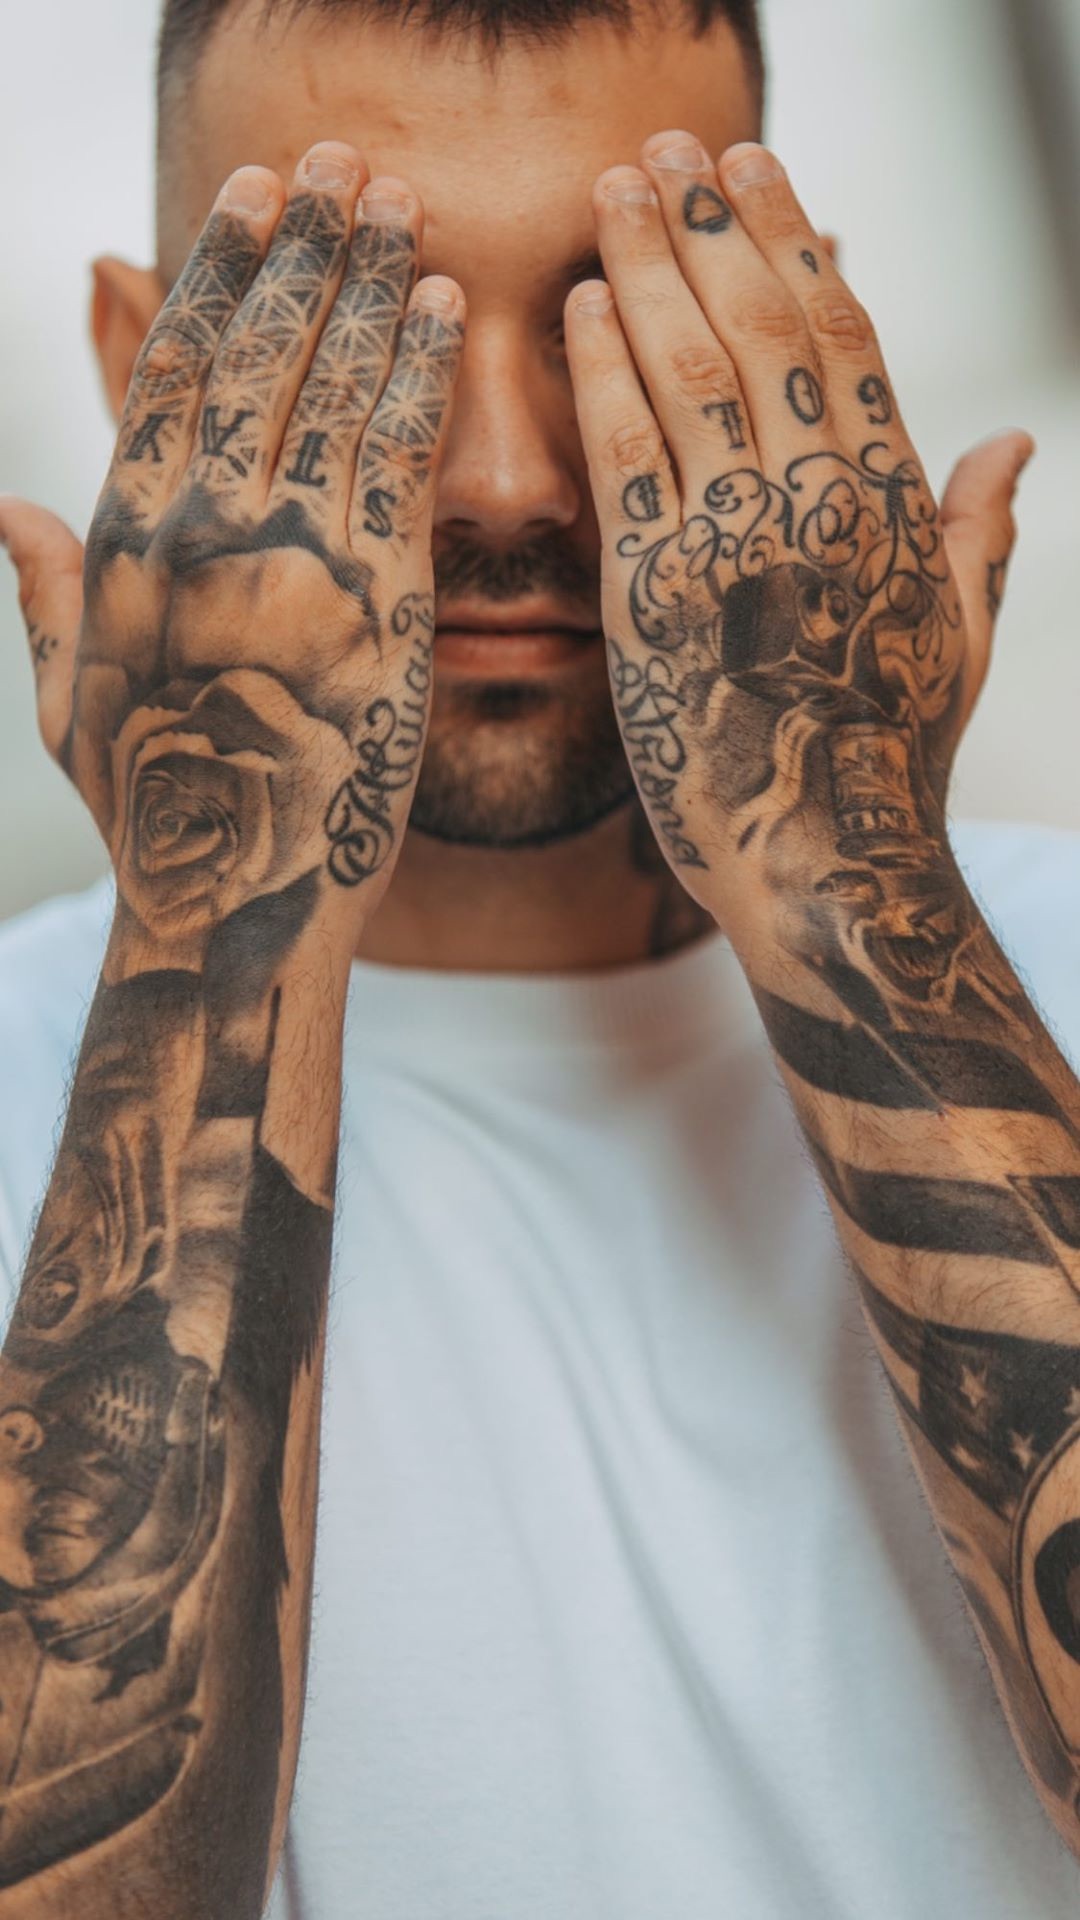 Marca personal_Nick_tatuajes 0